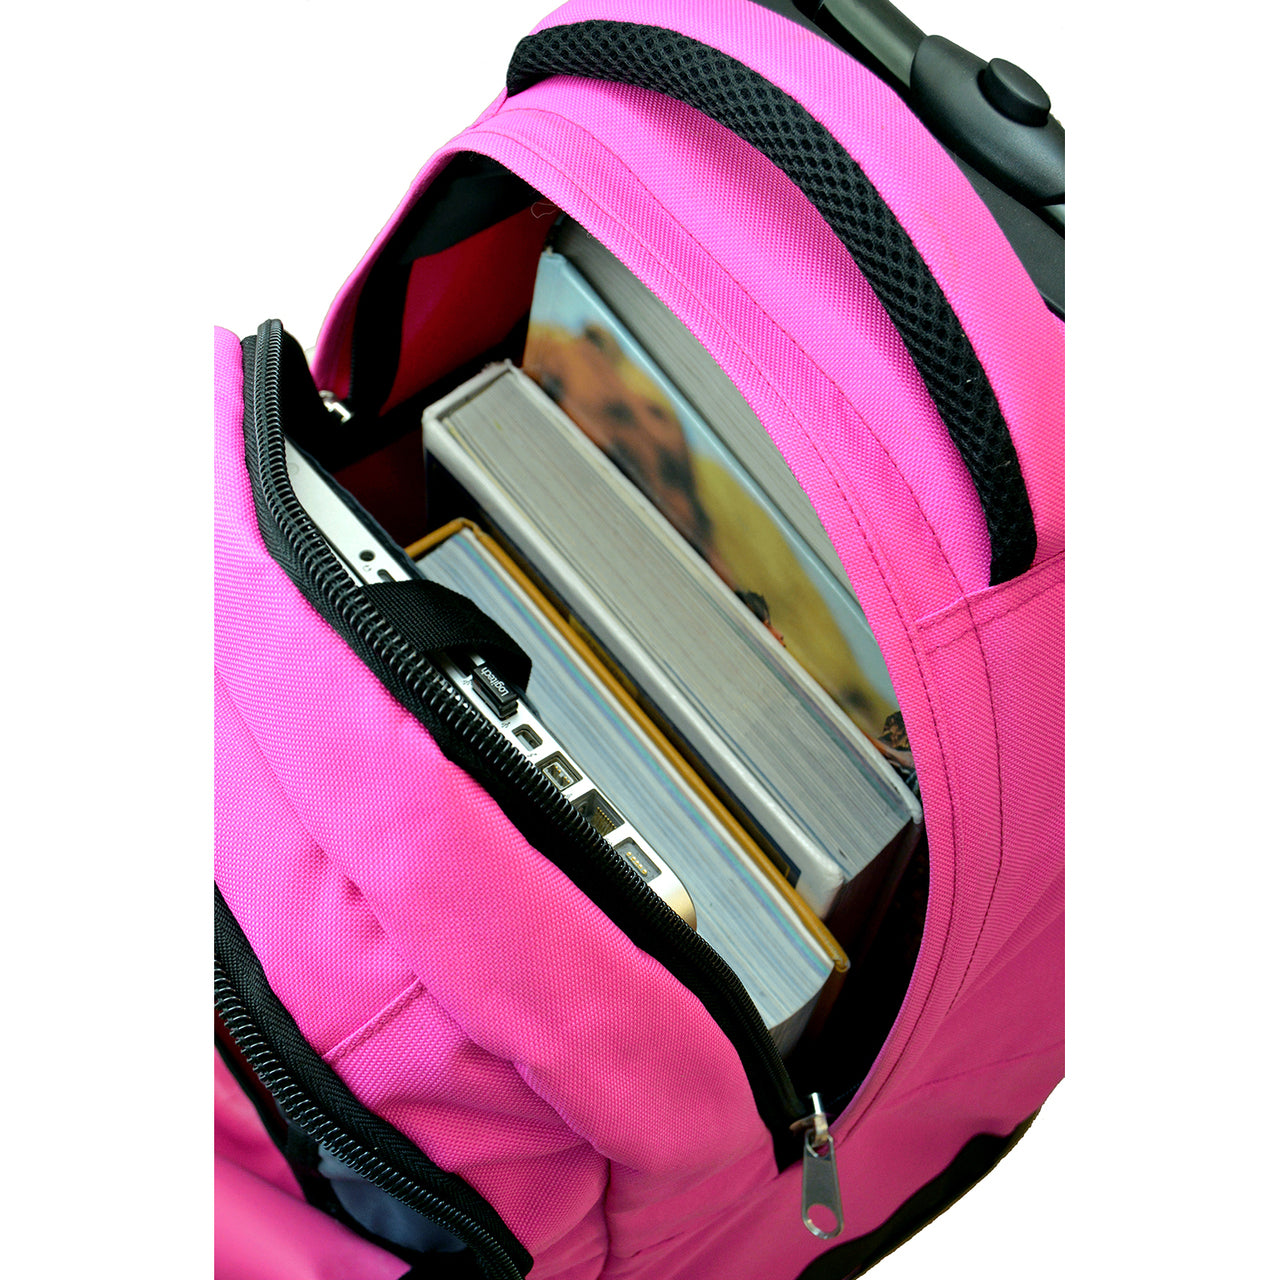 Ferris State Premium Wheeled Backpack in Pink